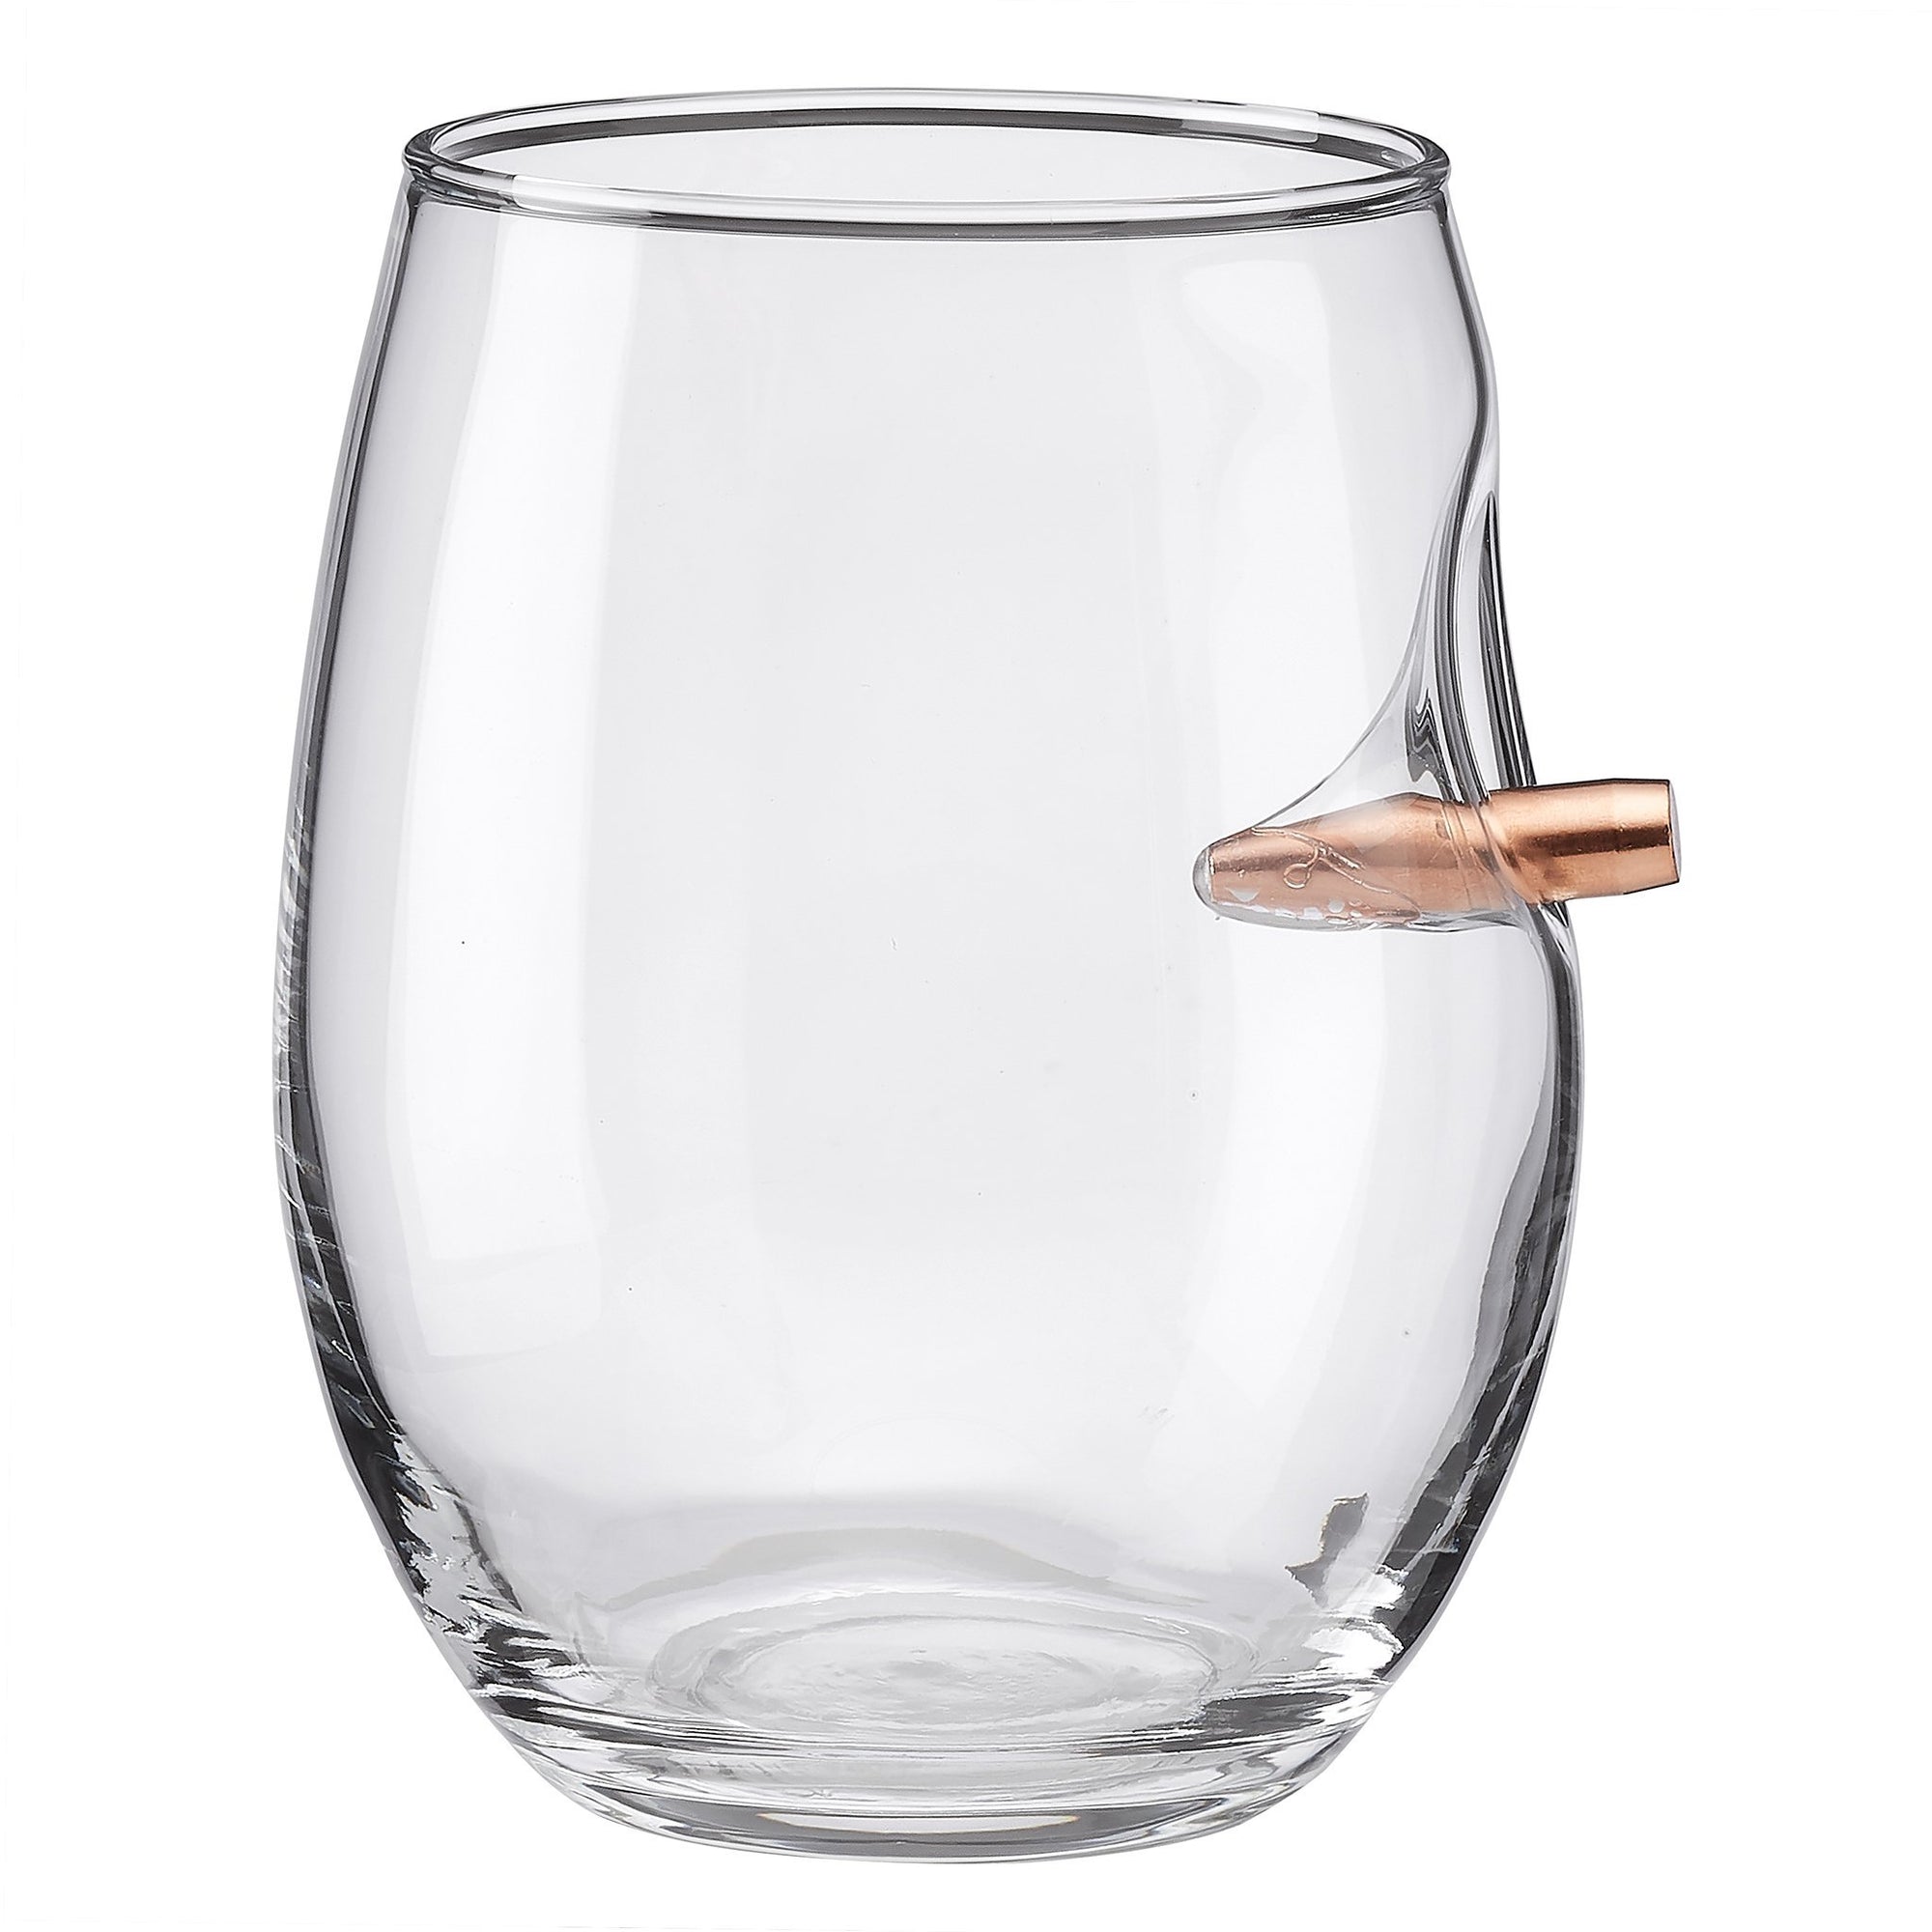 BenShot - "Bulletproof" Wine Glasses 15oz - GIFT SET OF 2